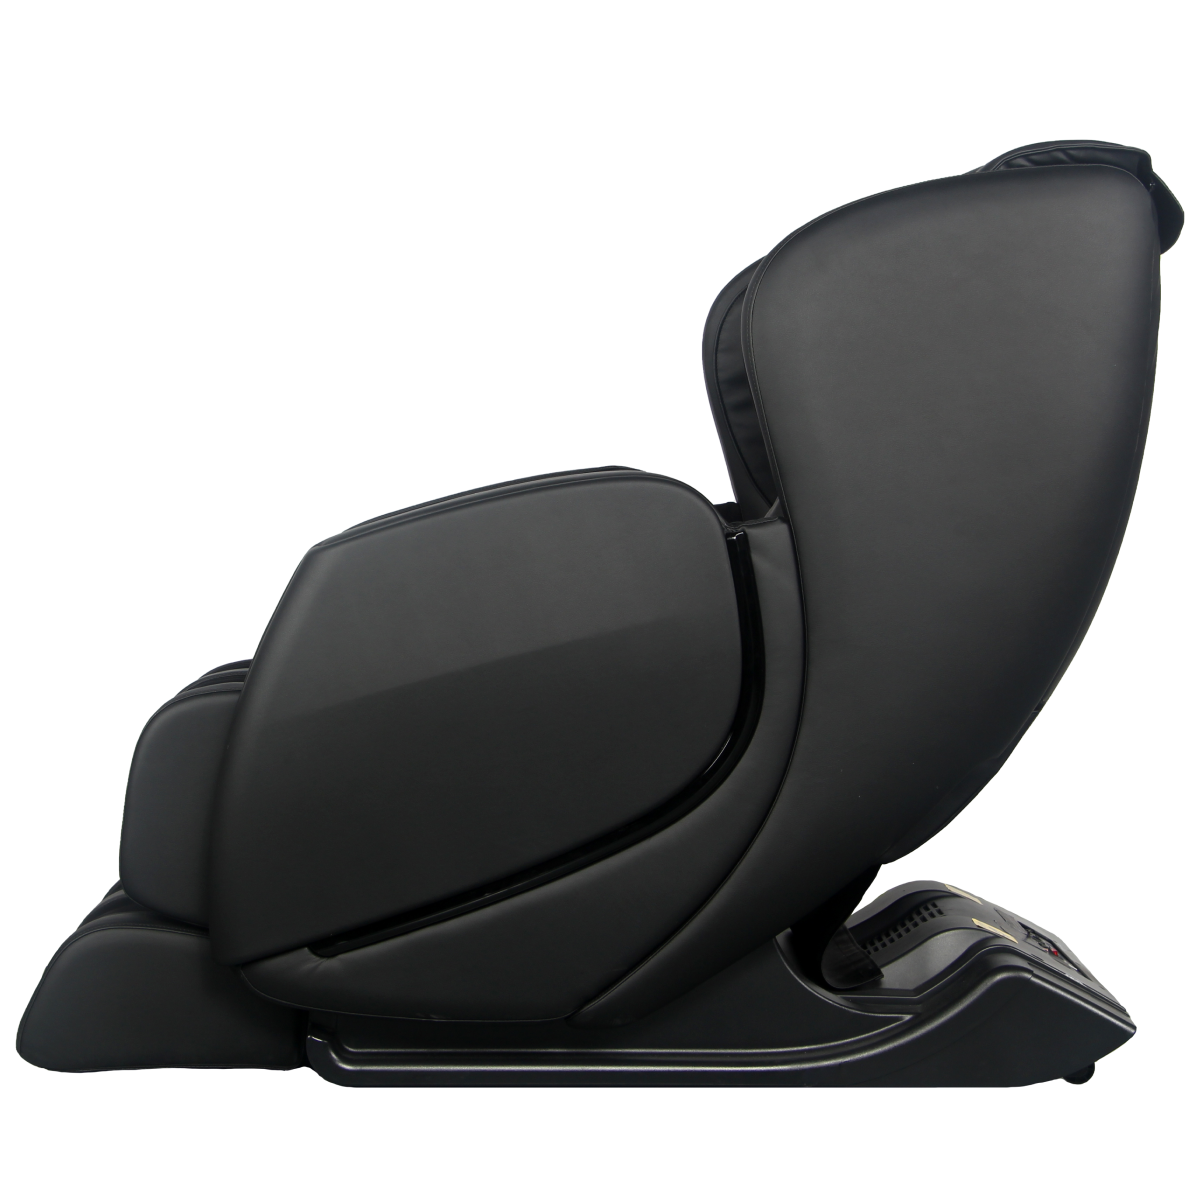 Sharper Image Revival Zero Gravity Massage Chair in Black - Home Bars USA